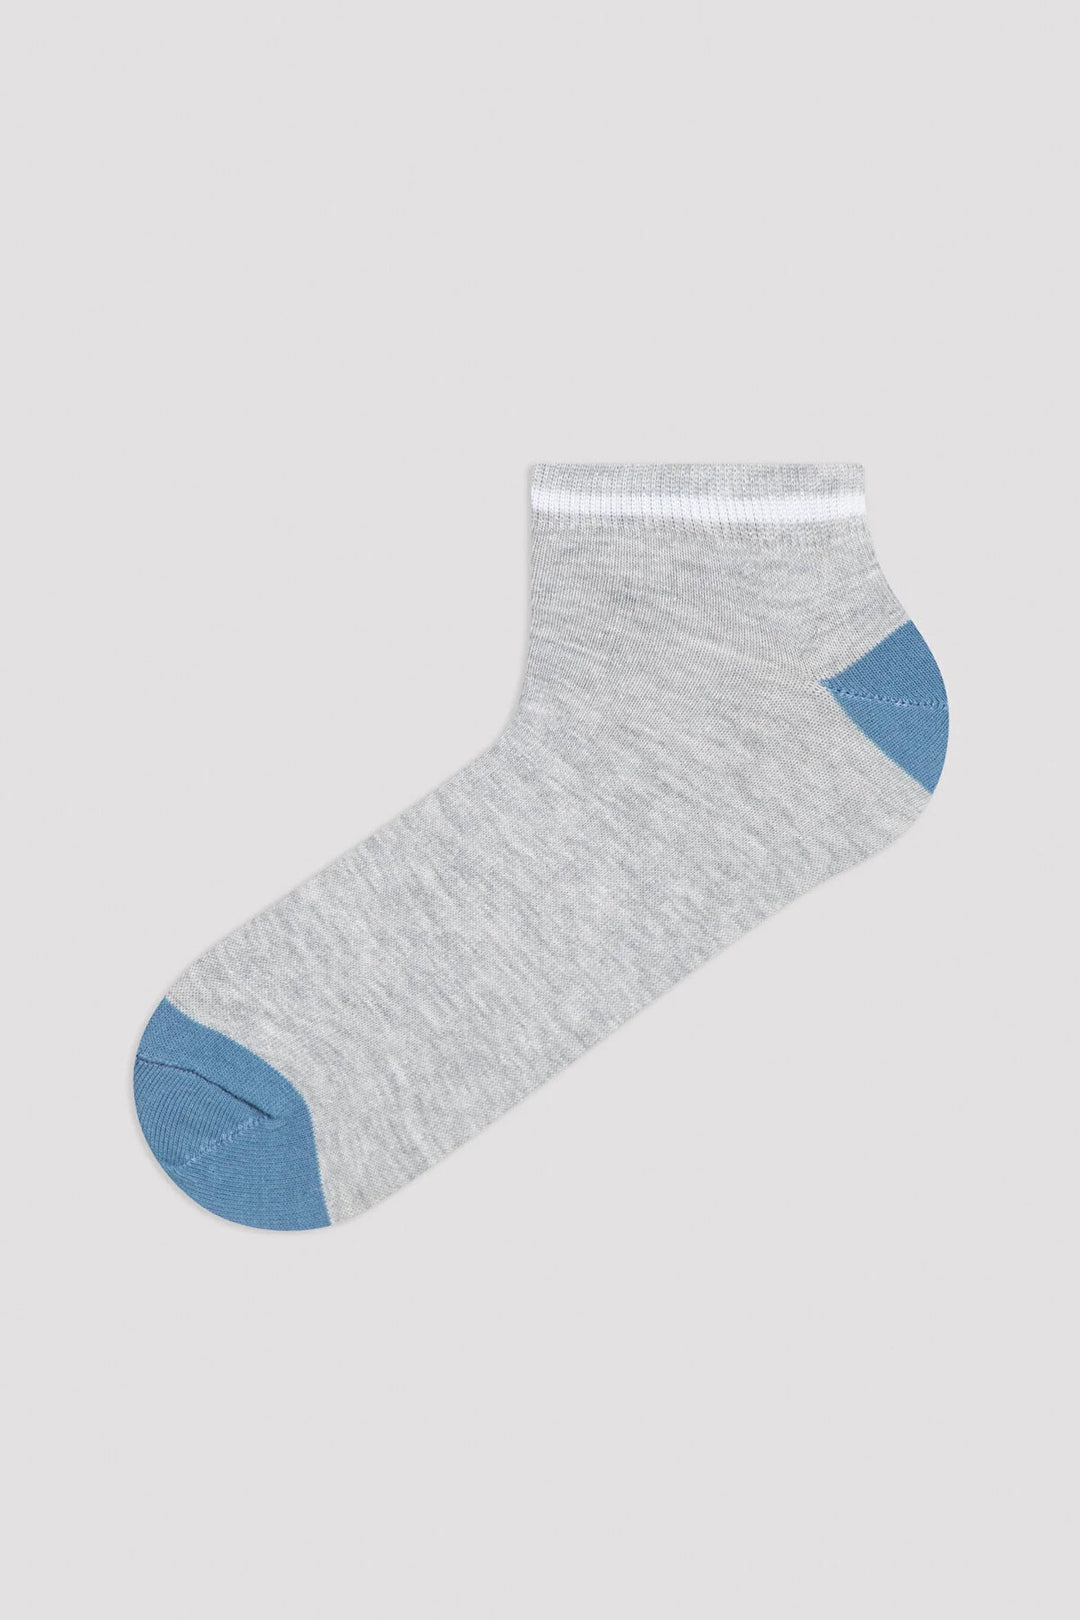 Esoft Colour 2In1 Socks